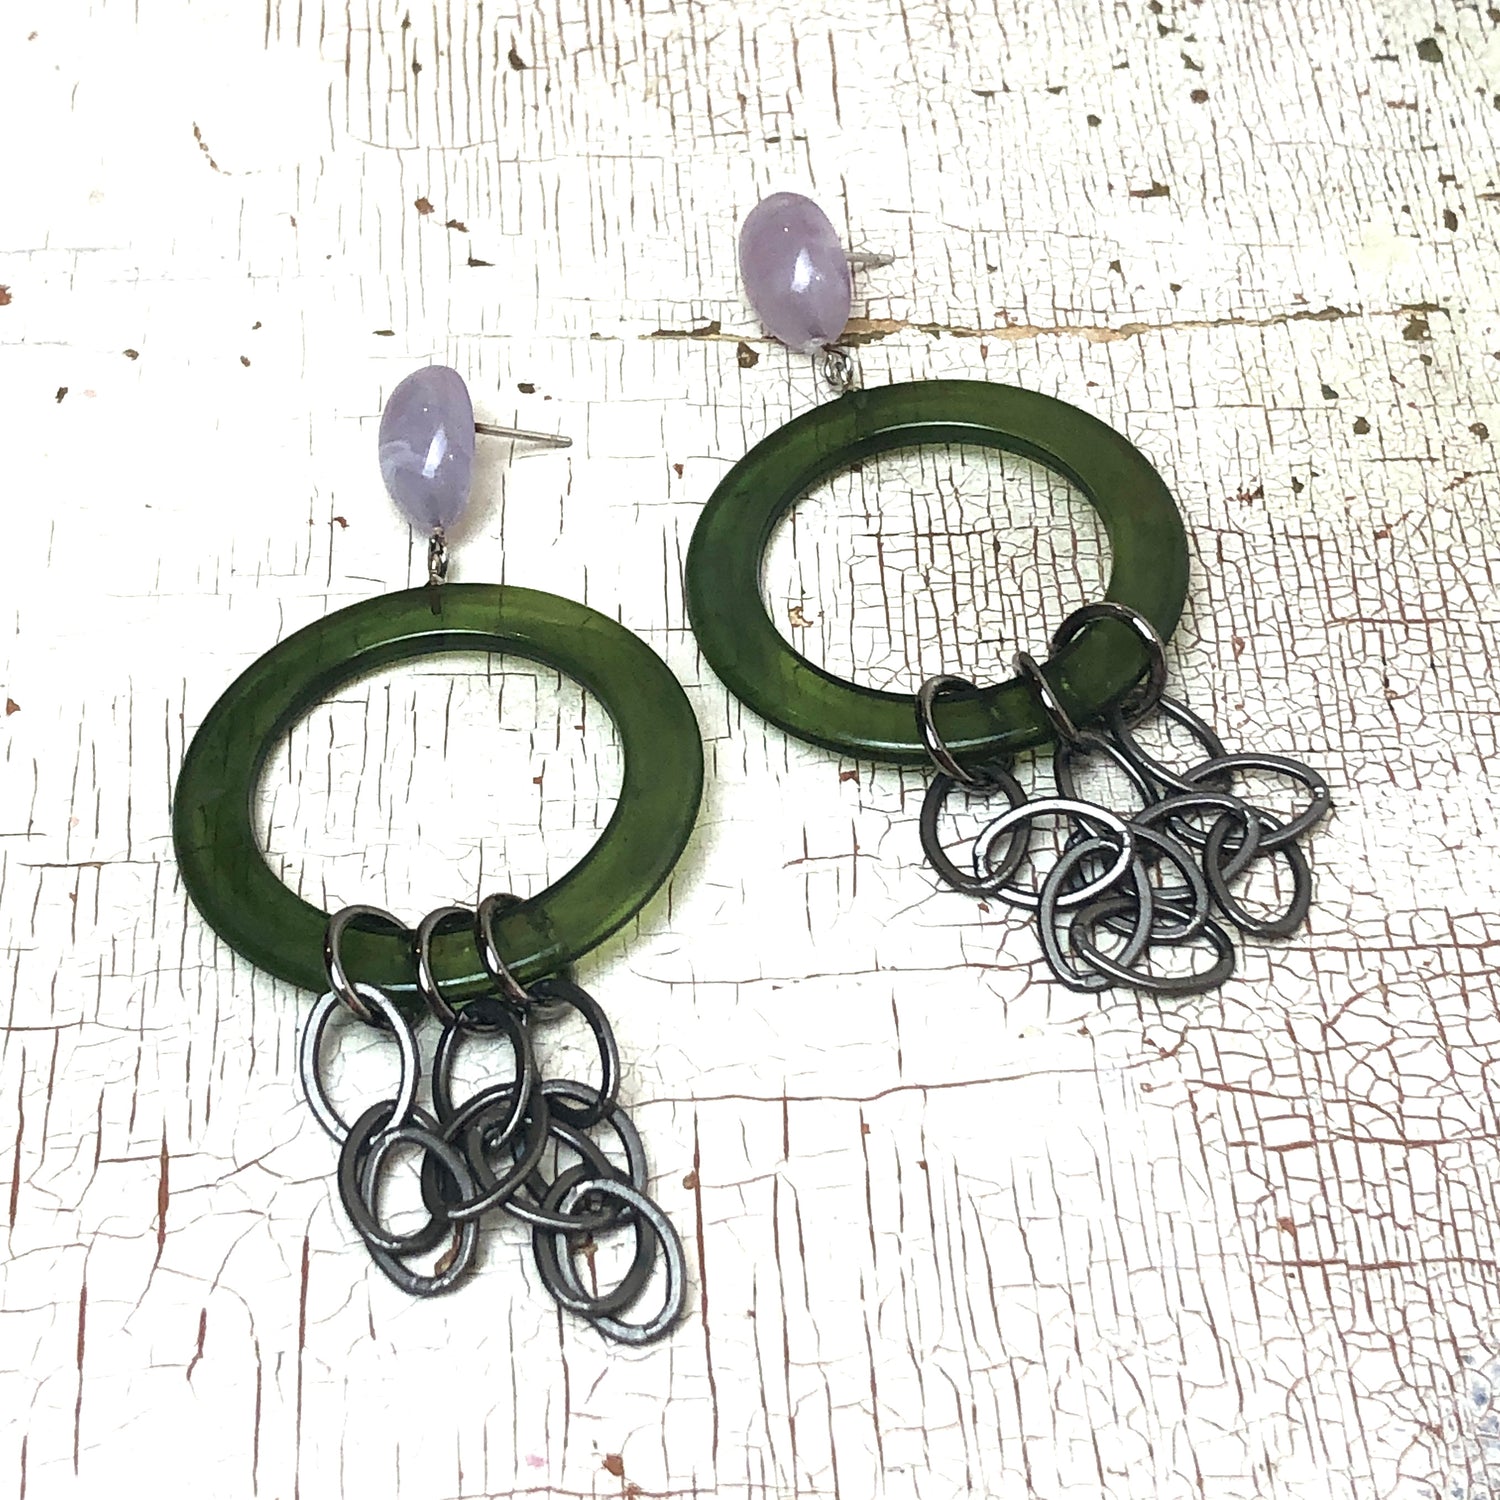 Olive &amp; Lilac Stephanie Chain Earrings